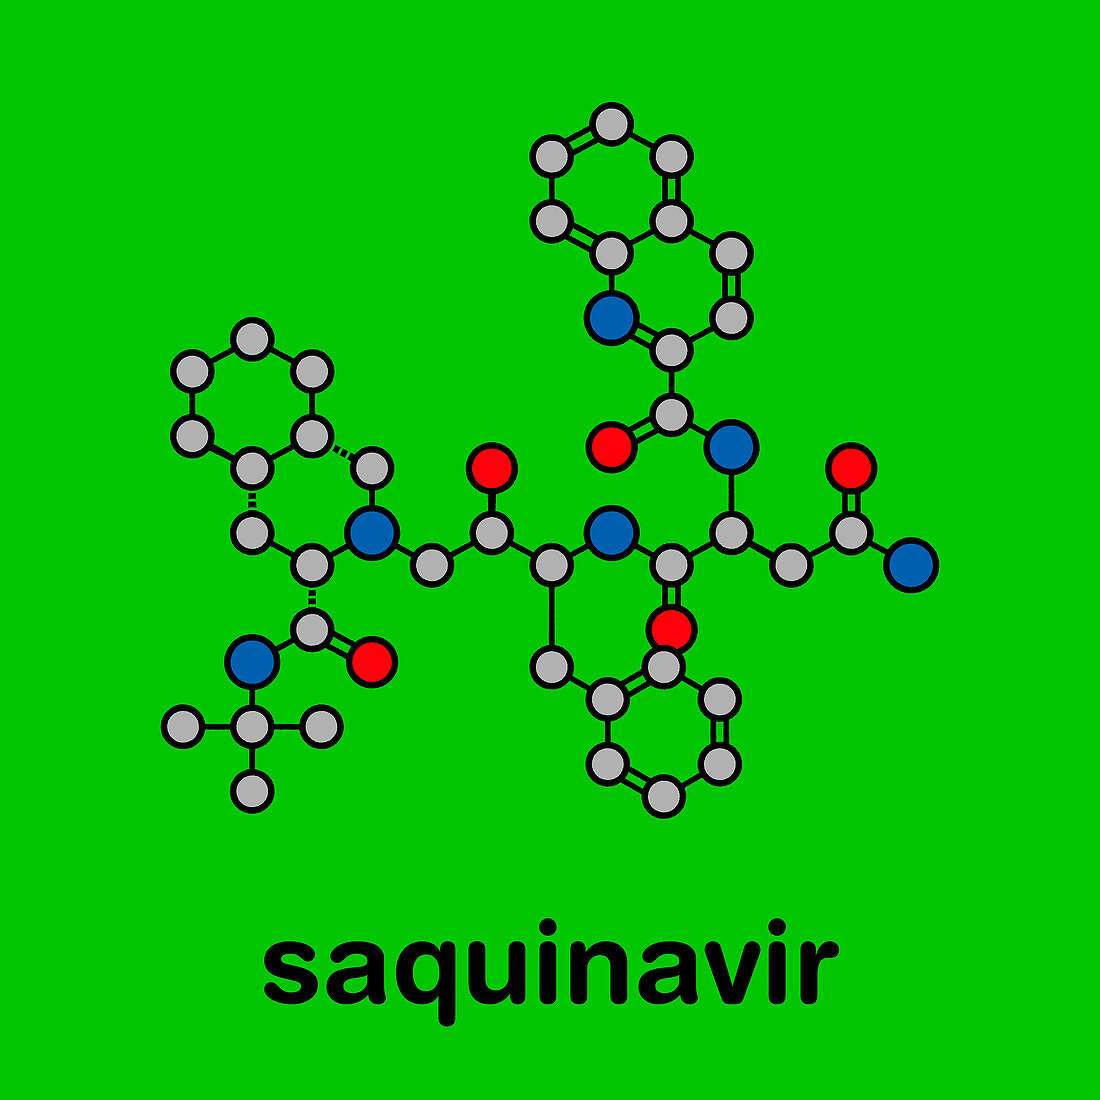 Saquinavir HIV drug, molecular model